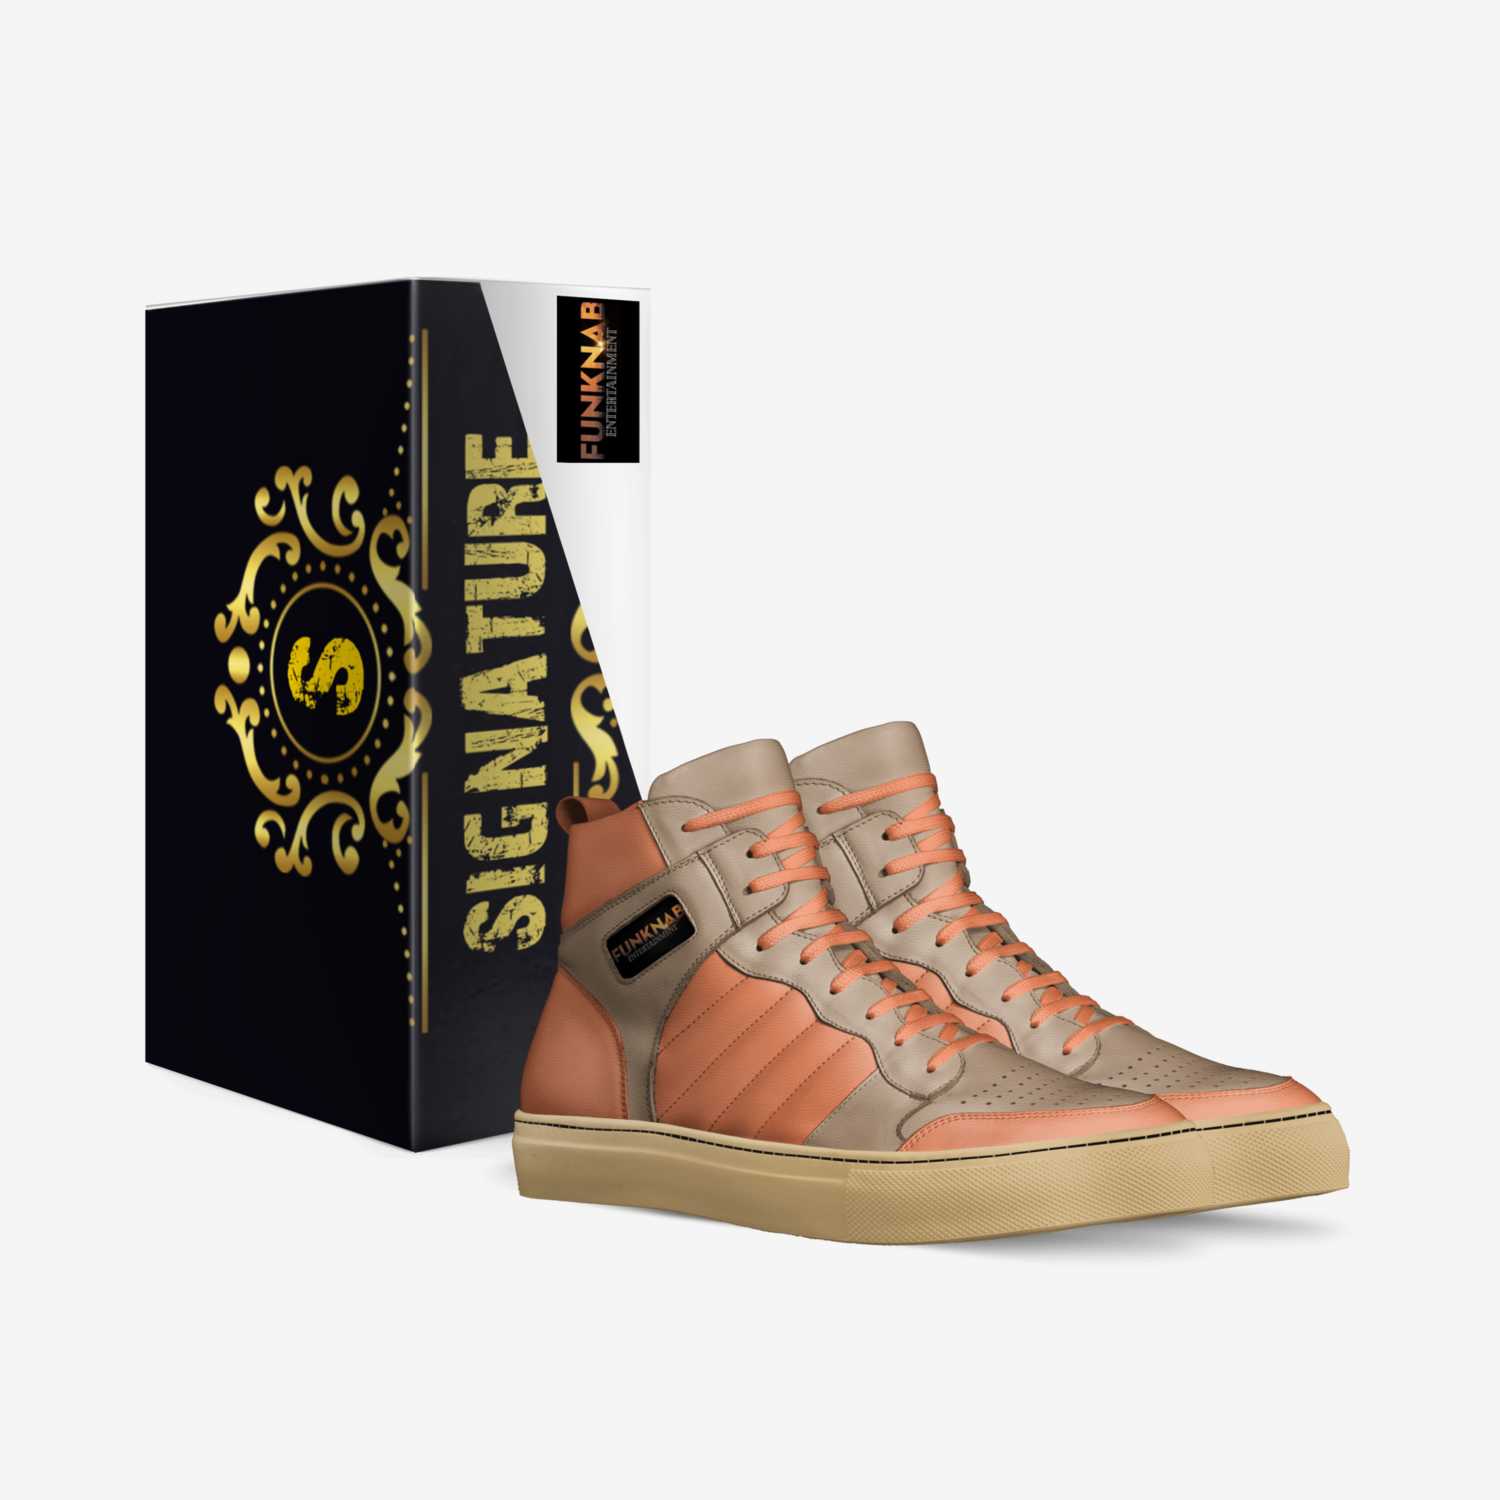 Da Sauce Signature custom made in Italy shoes by Rayshaun Hastings | Box view